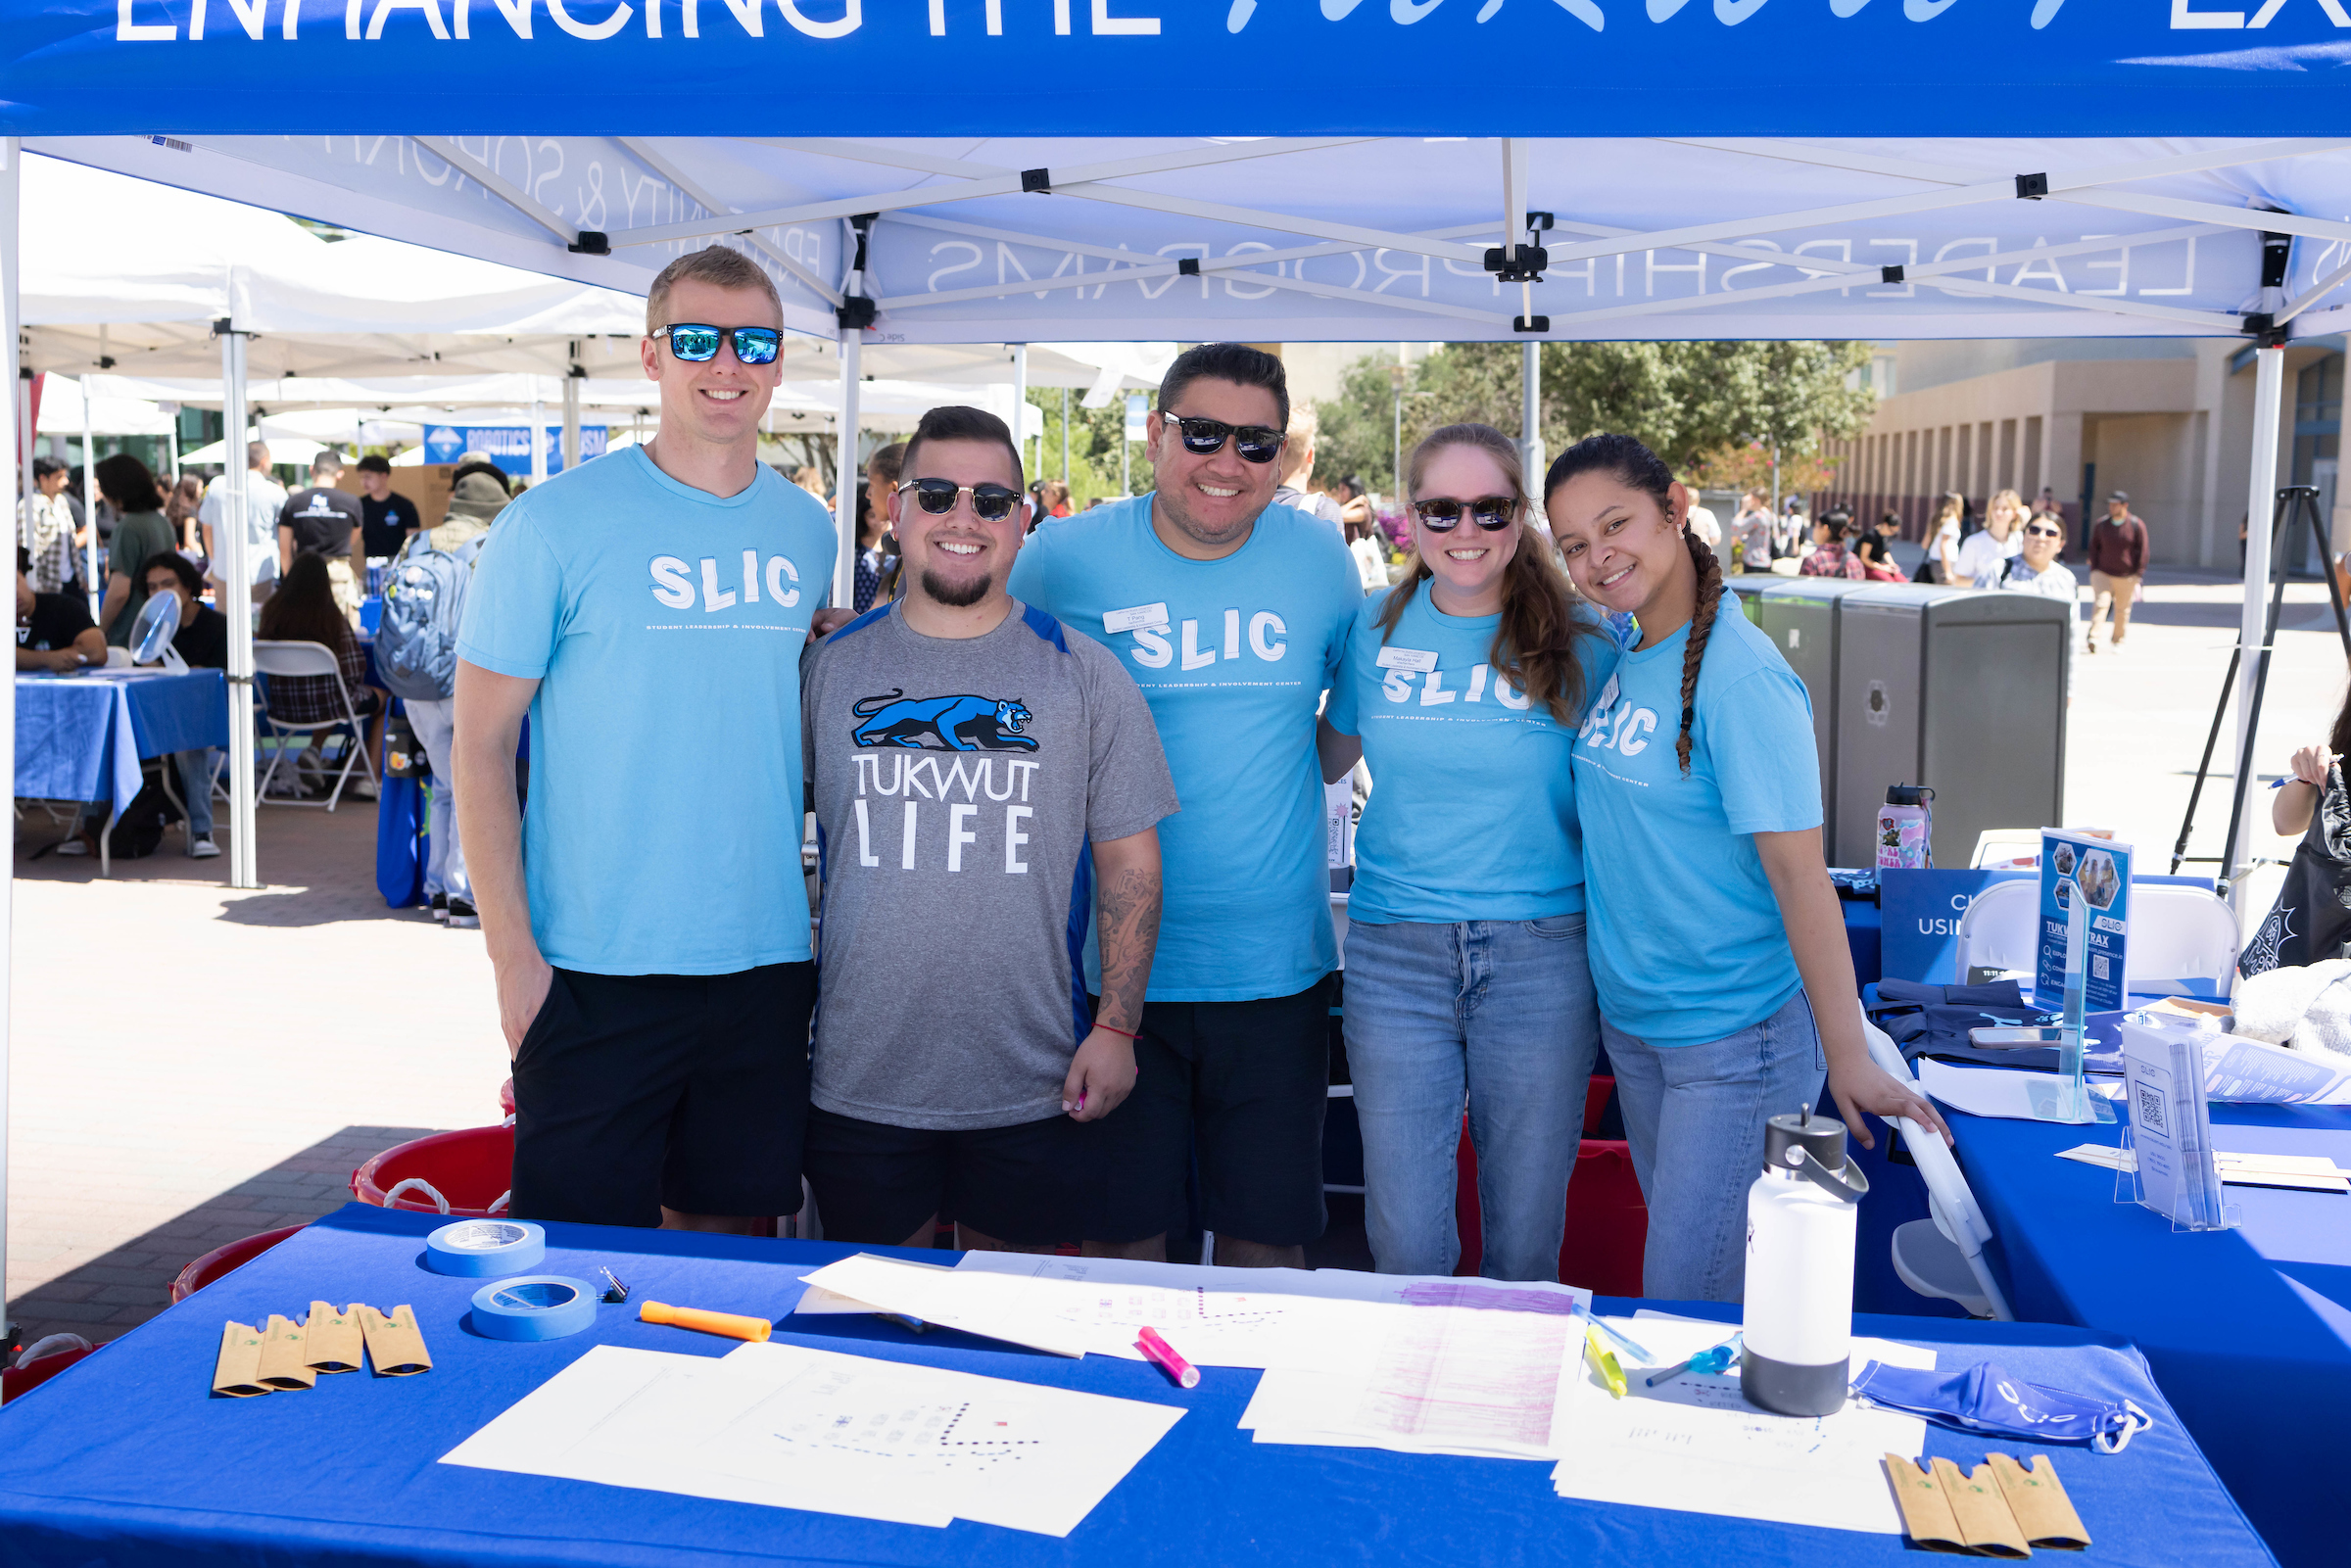 SLIC team standing at SLIC tent during Student Organization Fair